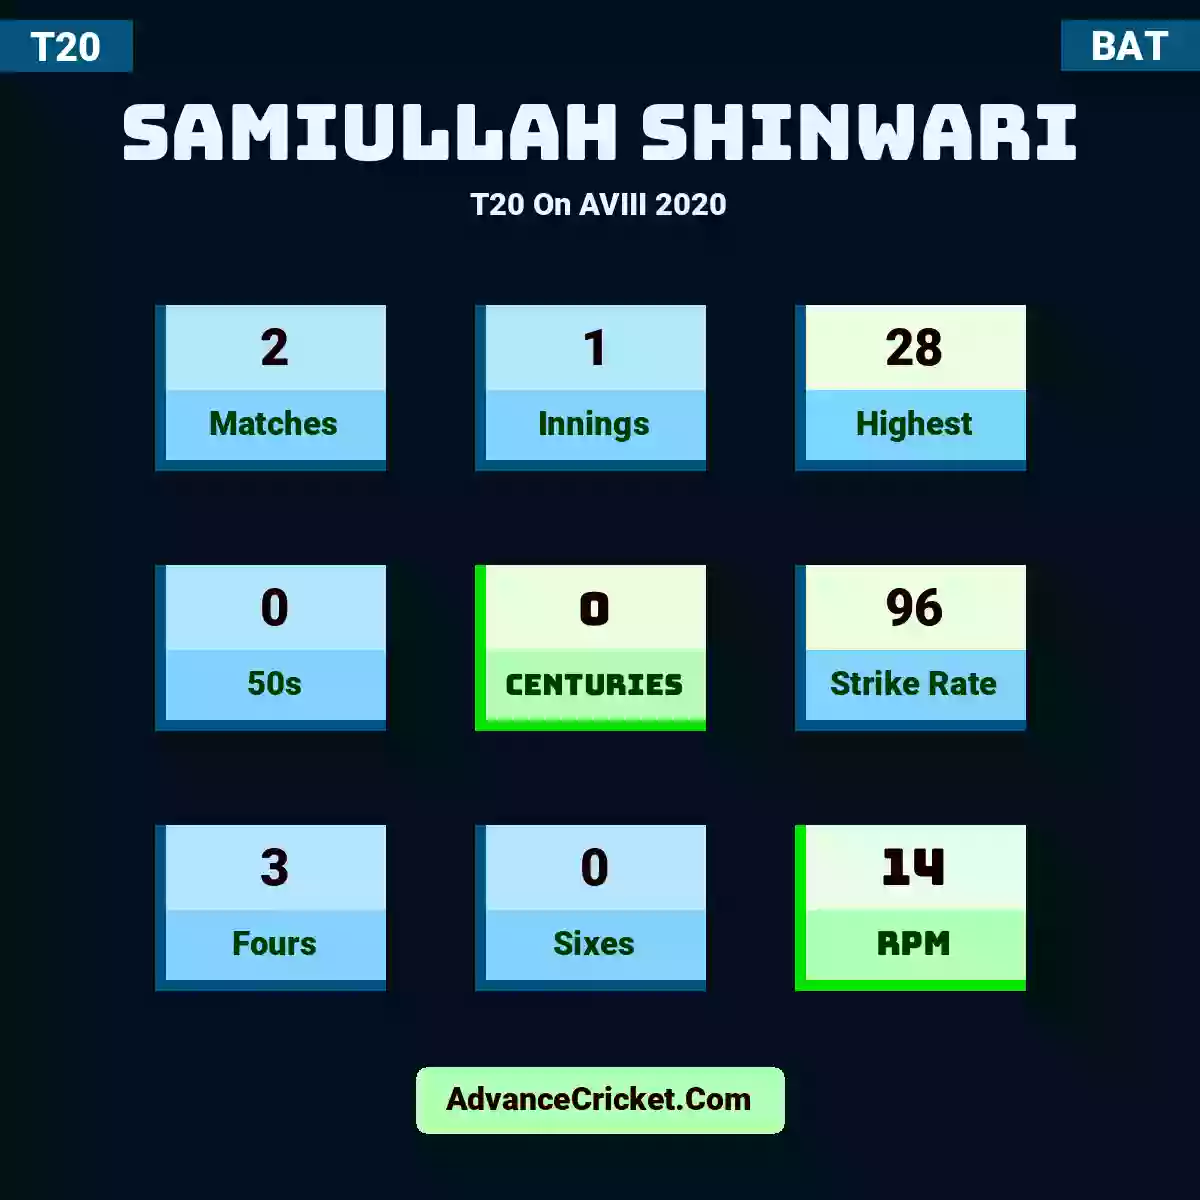 Samiullah Shinwari T20  On AVIII 2020, Samiullah Shinwari played 2 matches, scored 28 runs as highest, 0 half-centuries, and 0 centuries, with a strike rate of 96. S.Shinwari hit 3 fours and 0 sixes, with an RPM of 14.